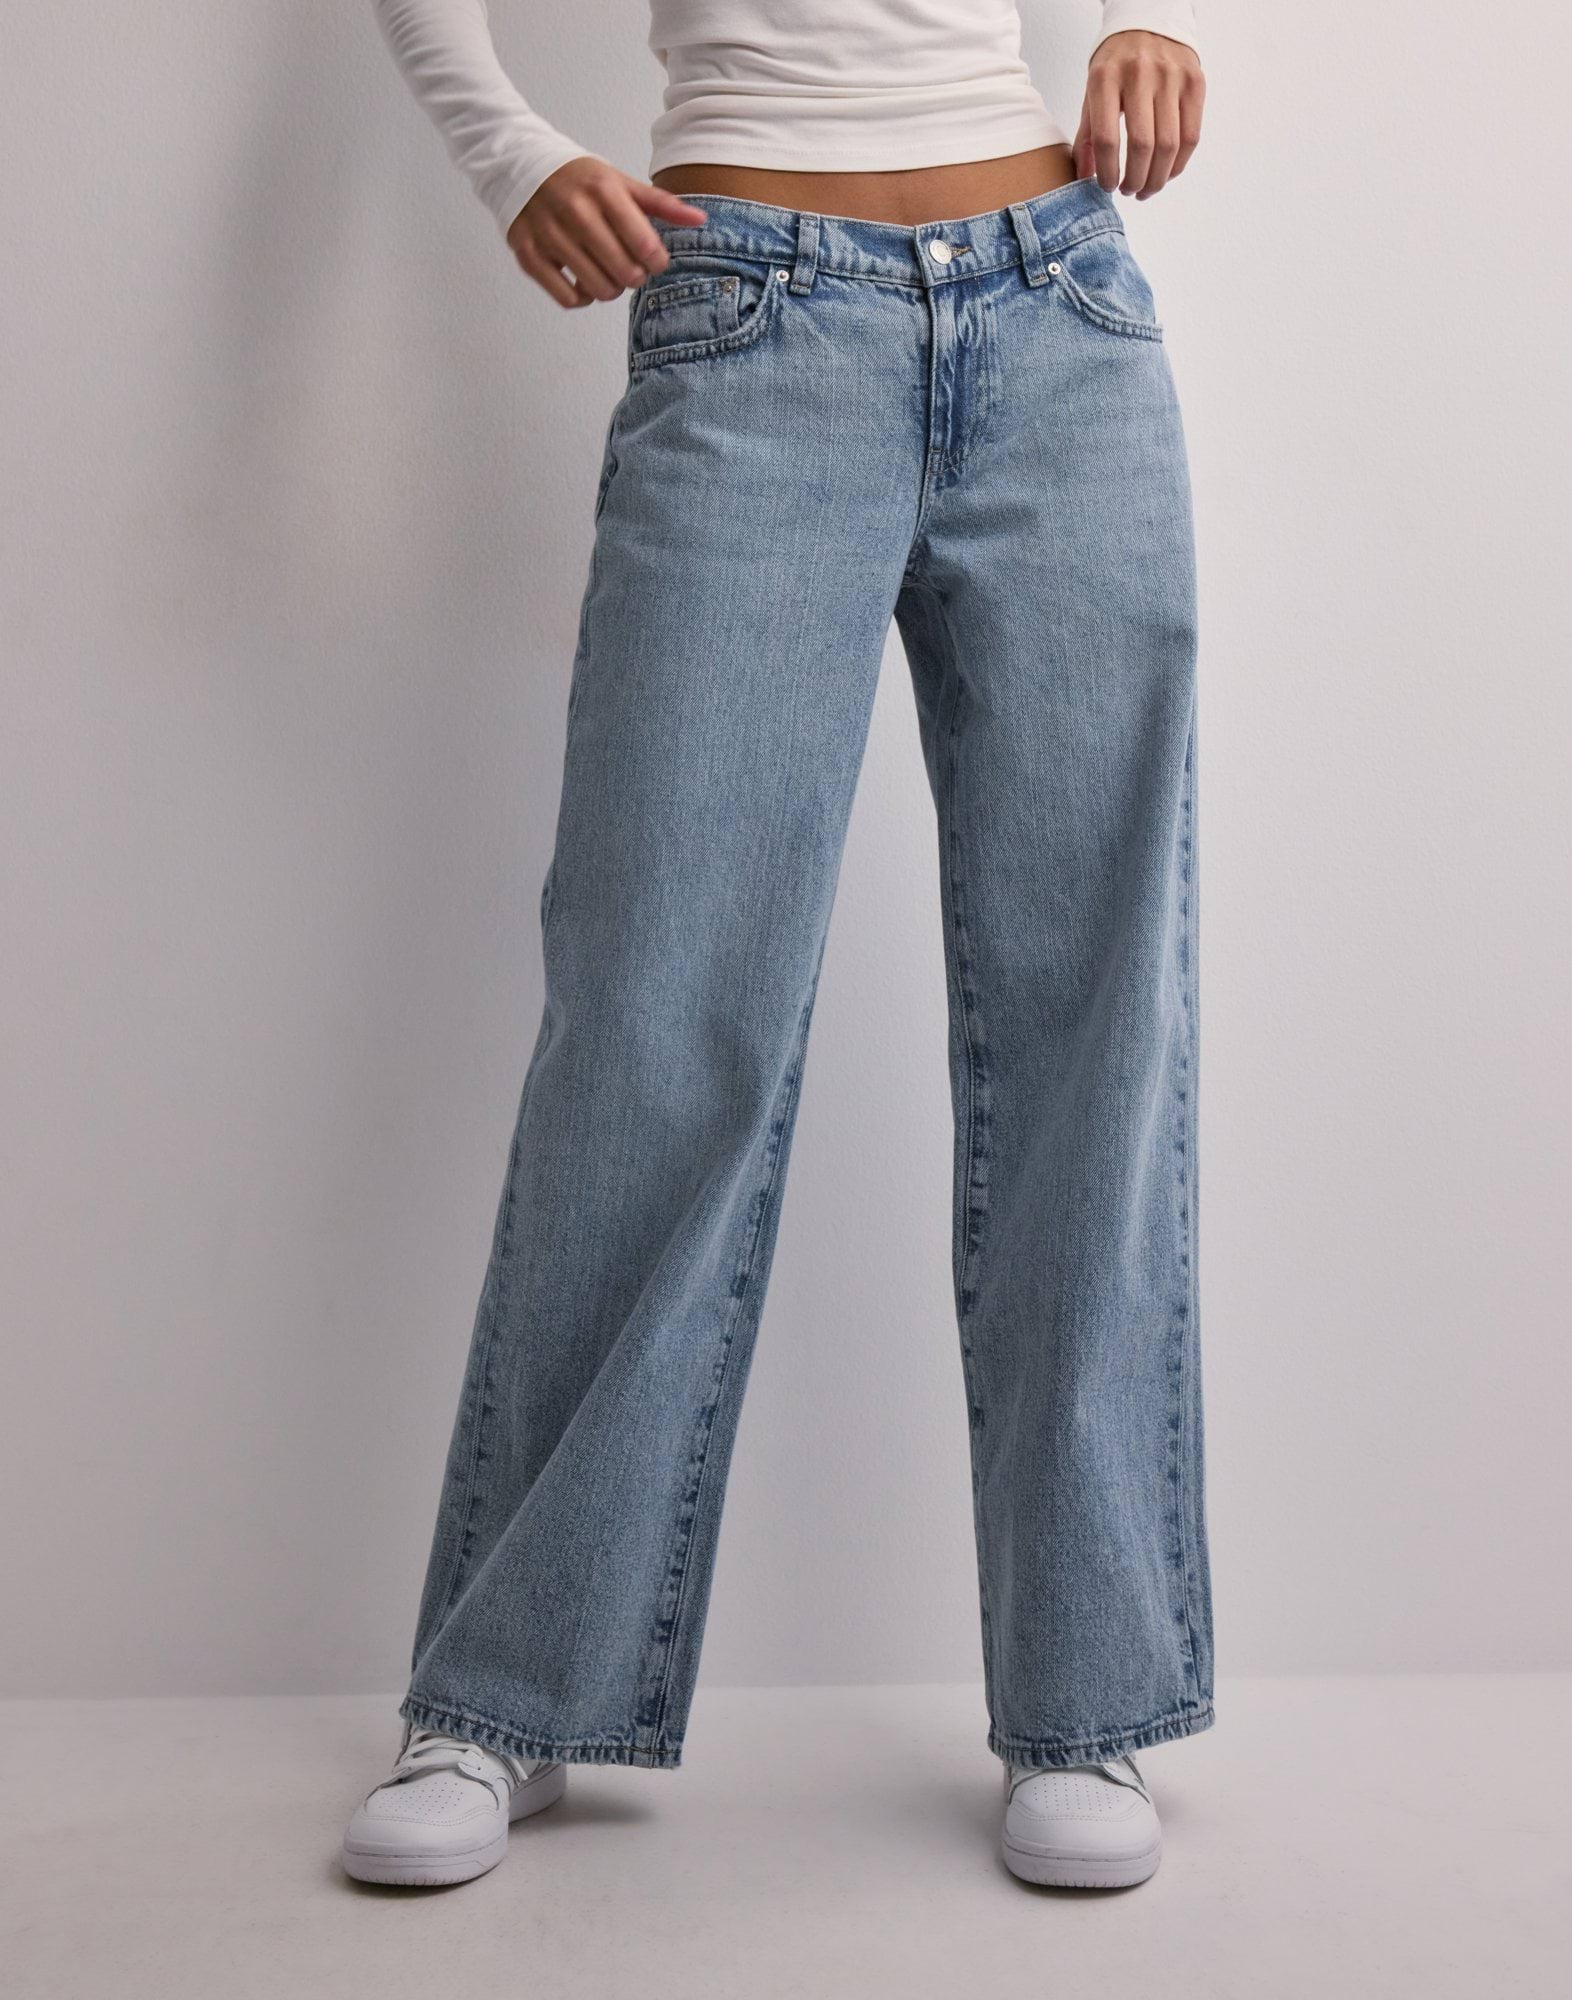 Low wide jeans